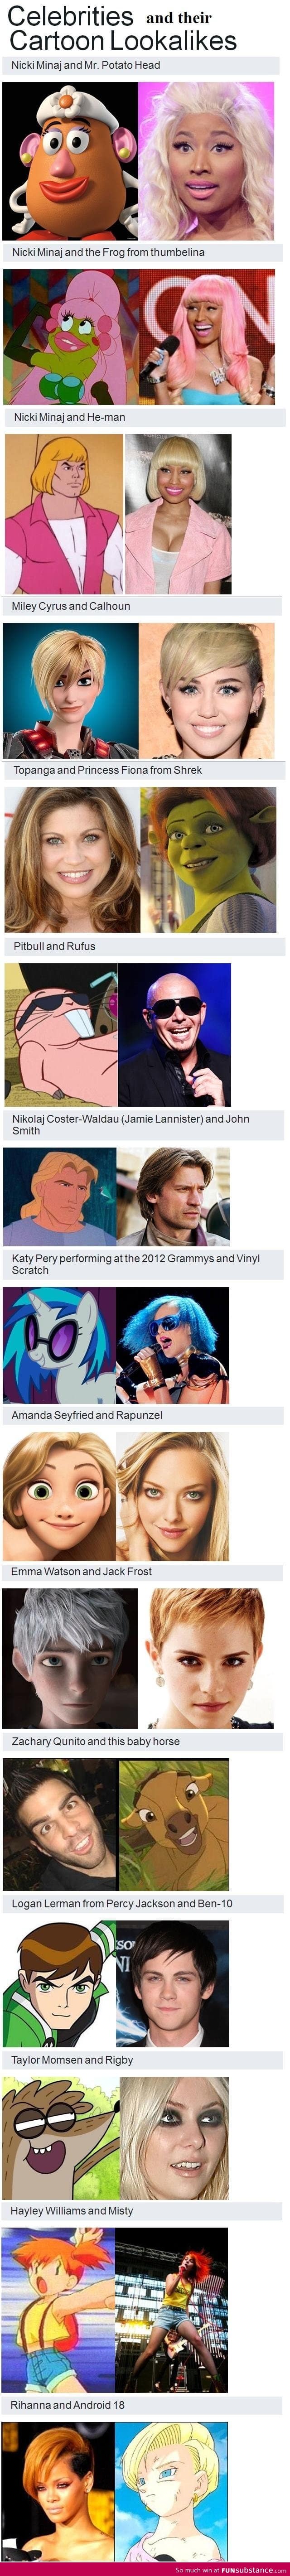 Celebrity and cartoon look alikes